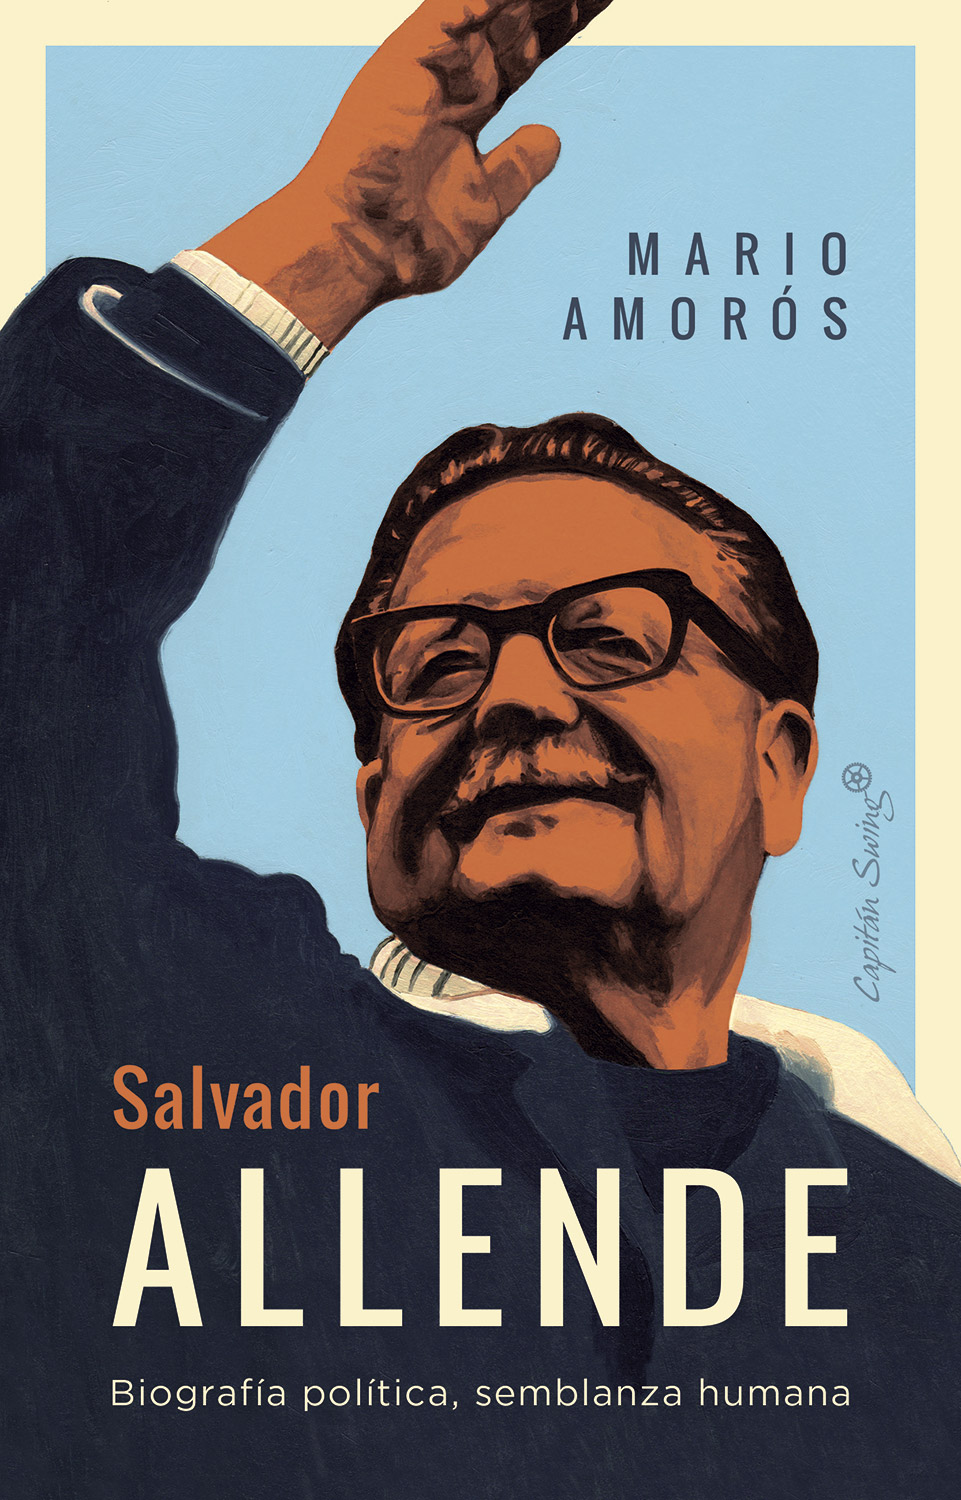 SALVADOR ALLENDE - Mario Amoros